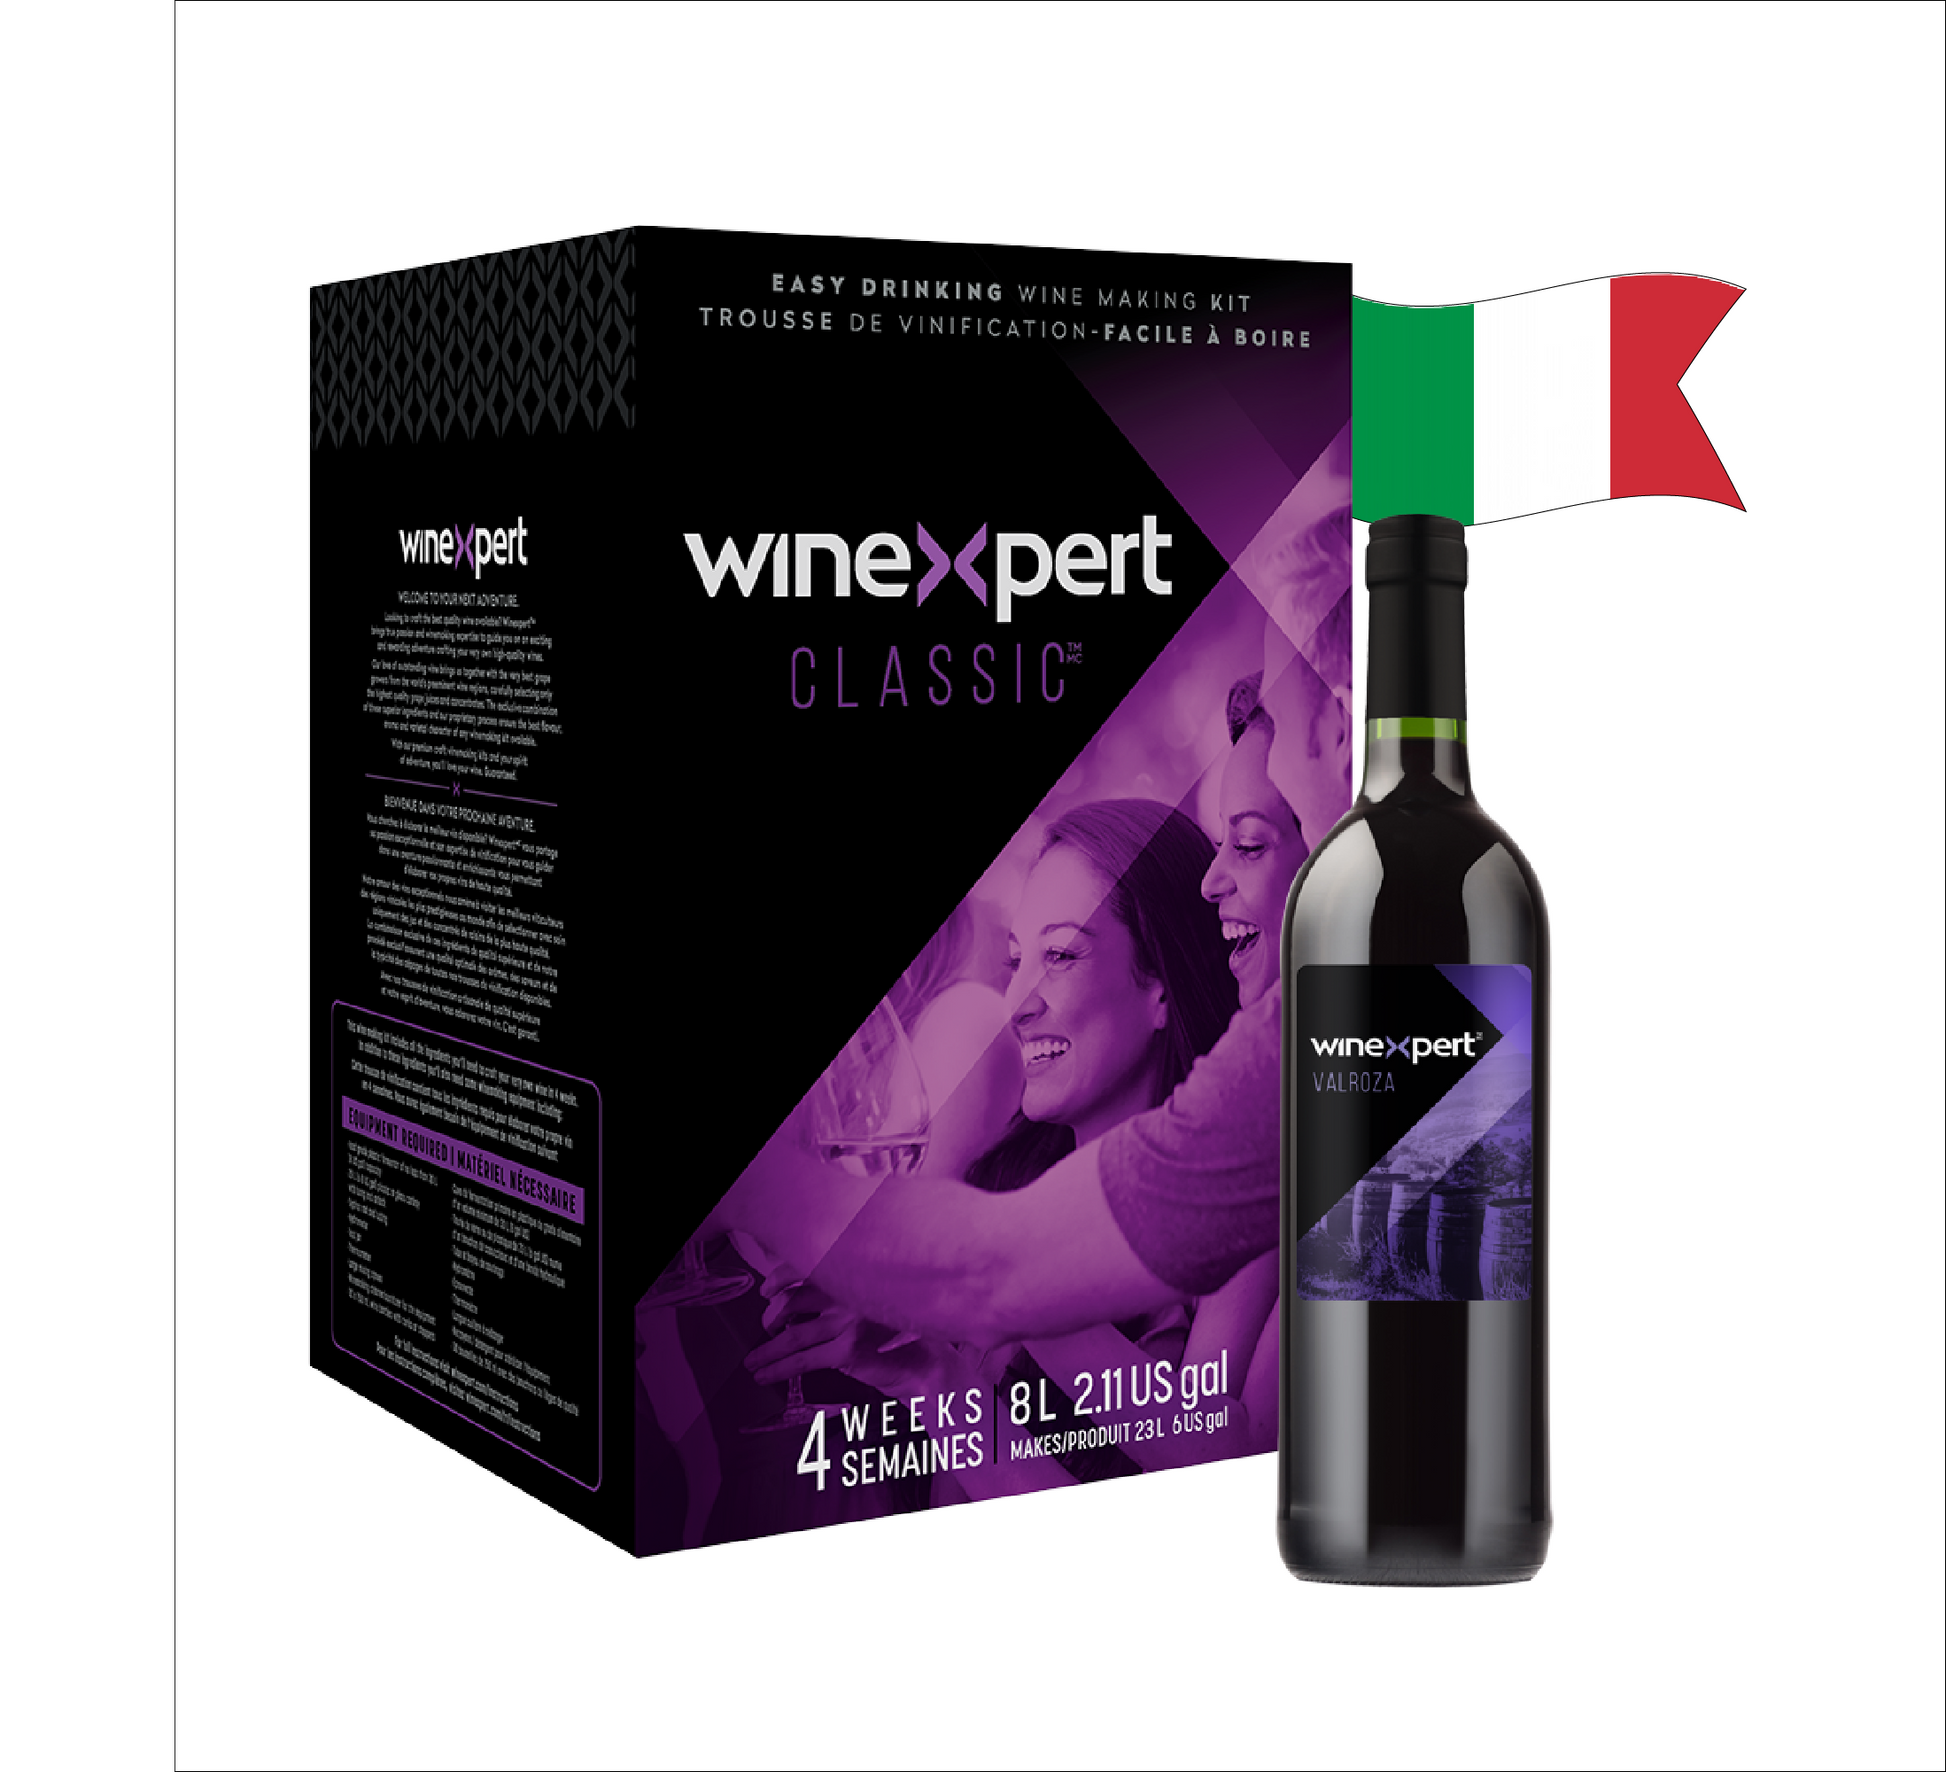 Winexpert Classic Valroza - Italy